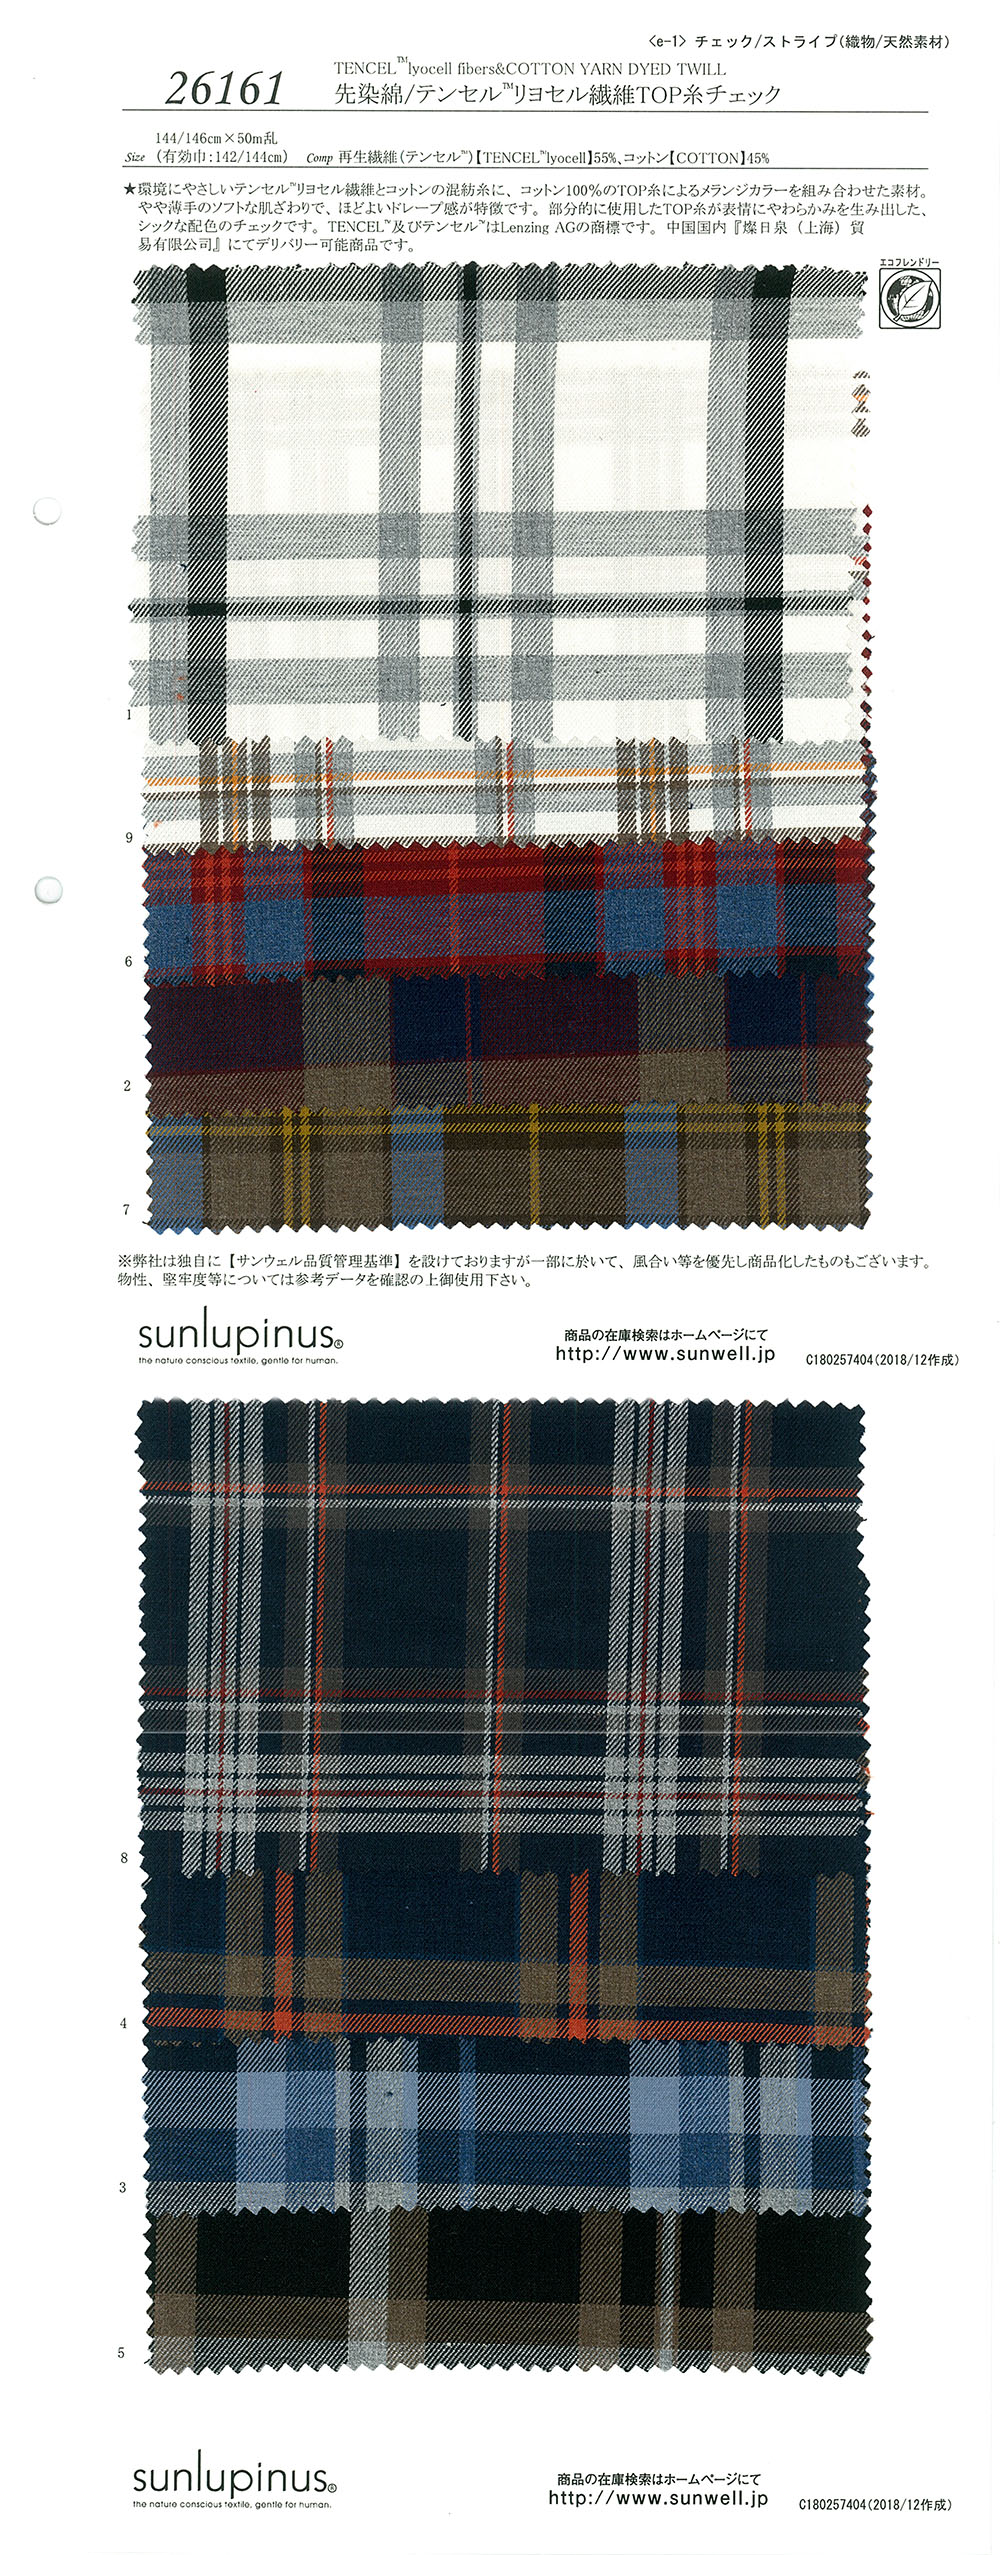 26161 Algodón Teñido En Hilo / Tencel (TM) Lyocell Fiber TOP Thread Check[Fabrica Textil] SUNWELL